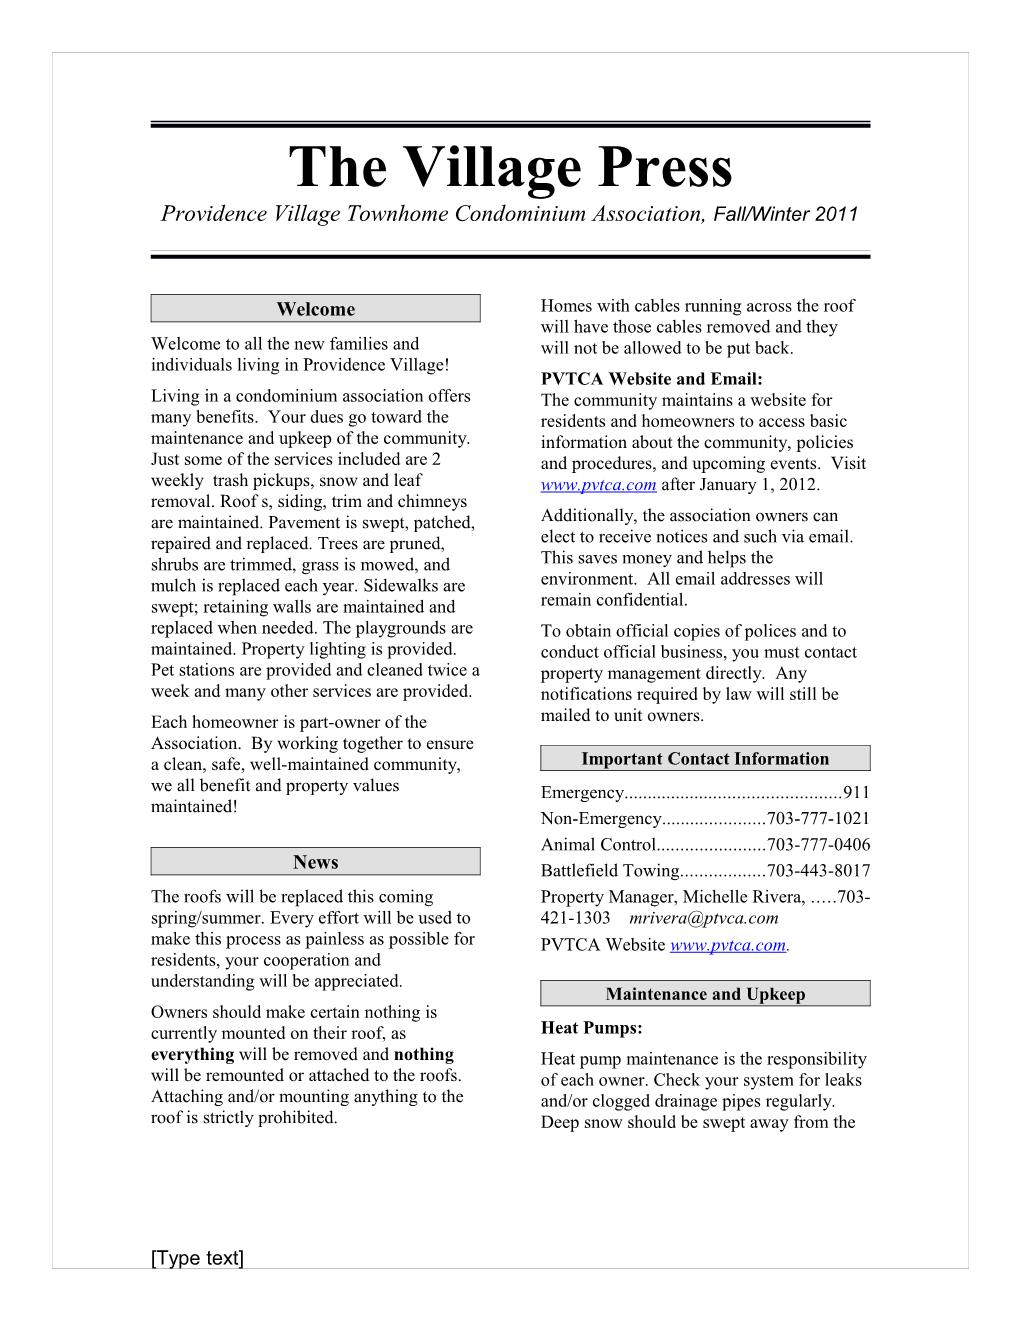 The Village Press